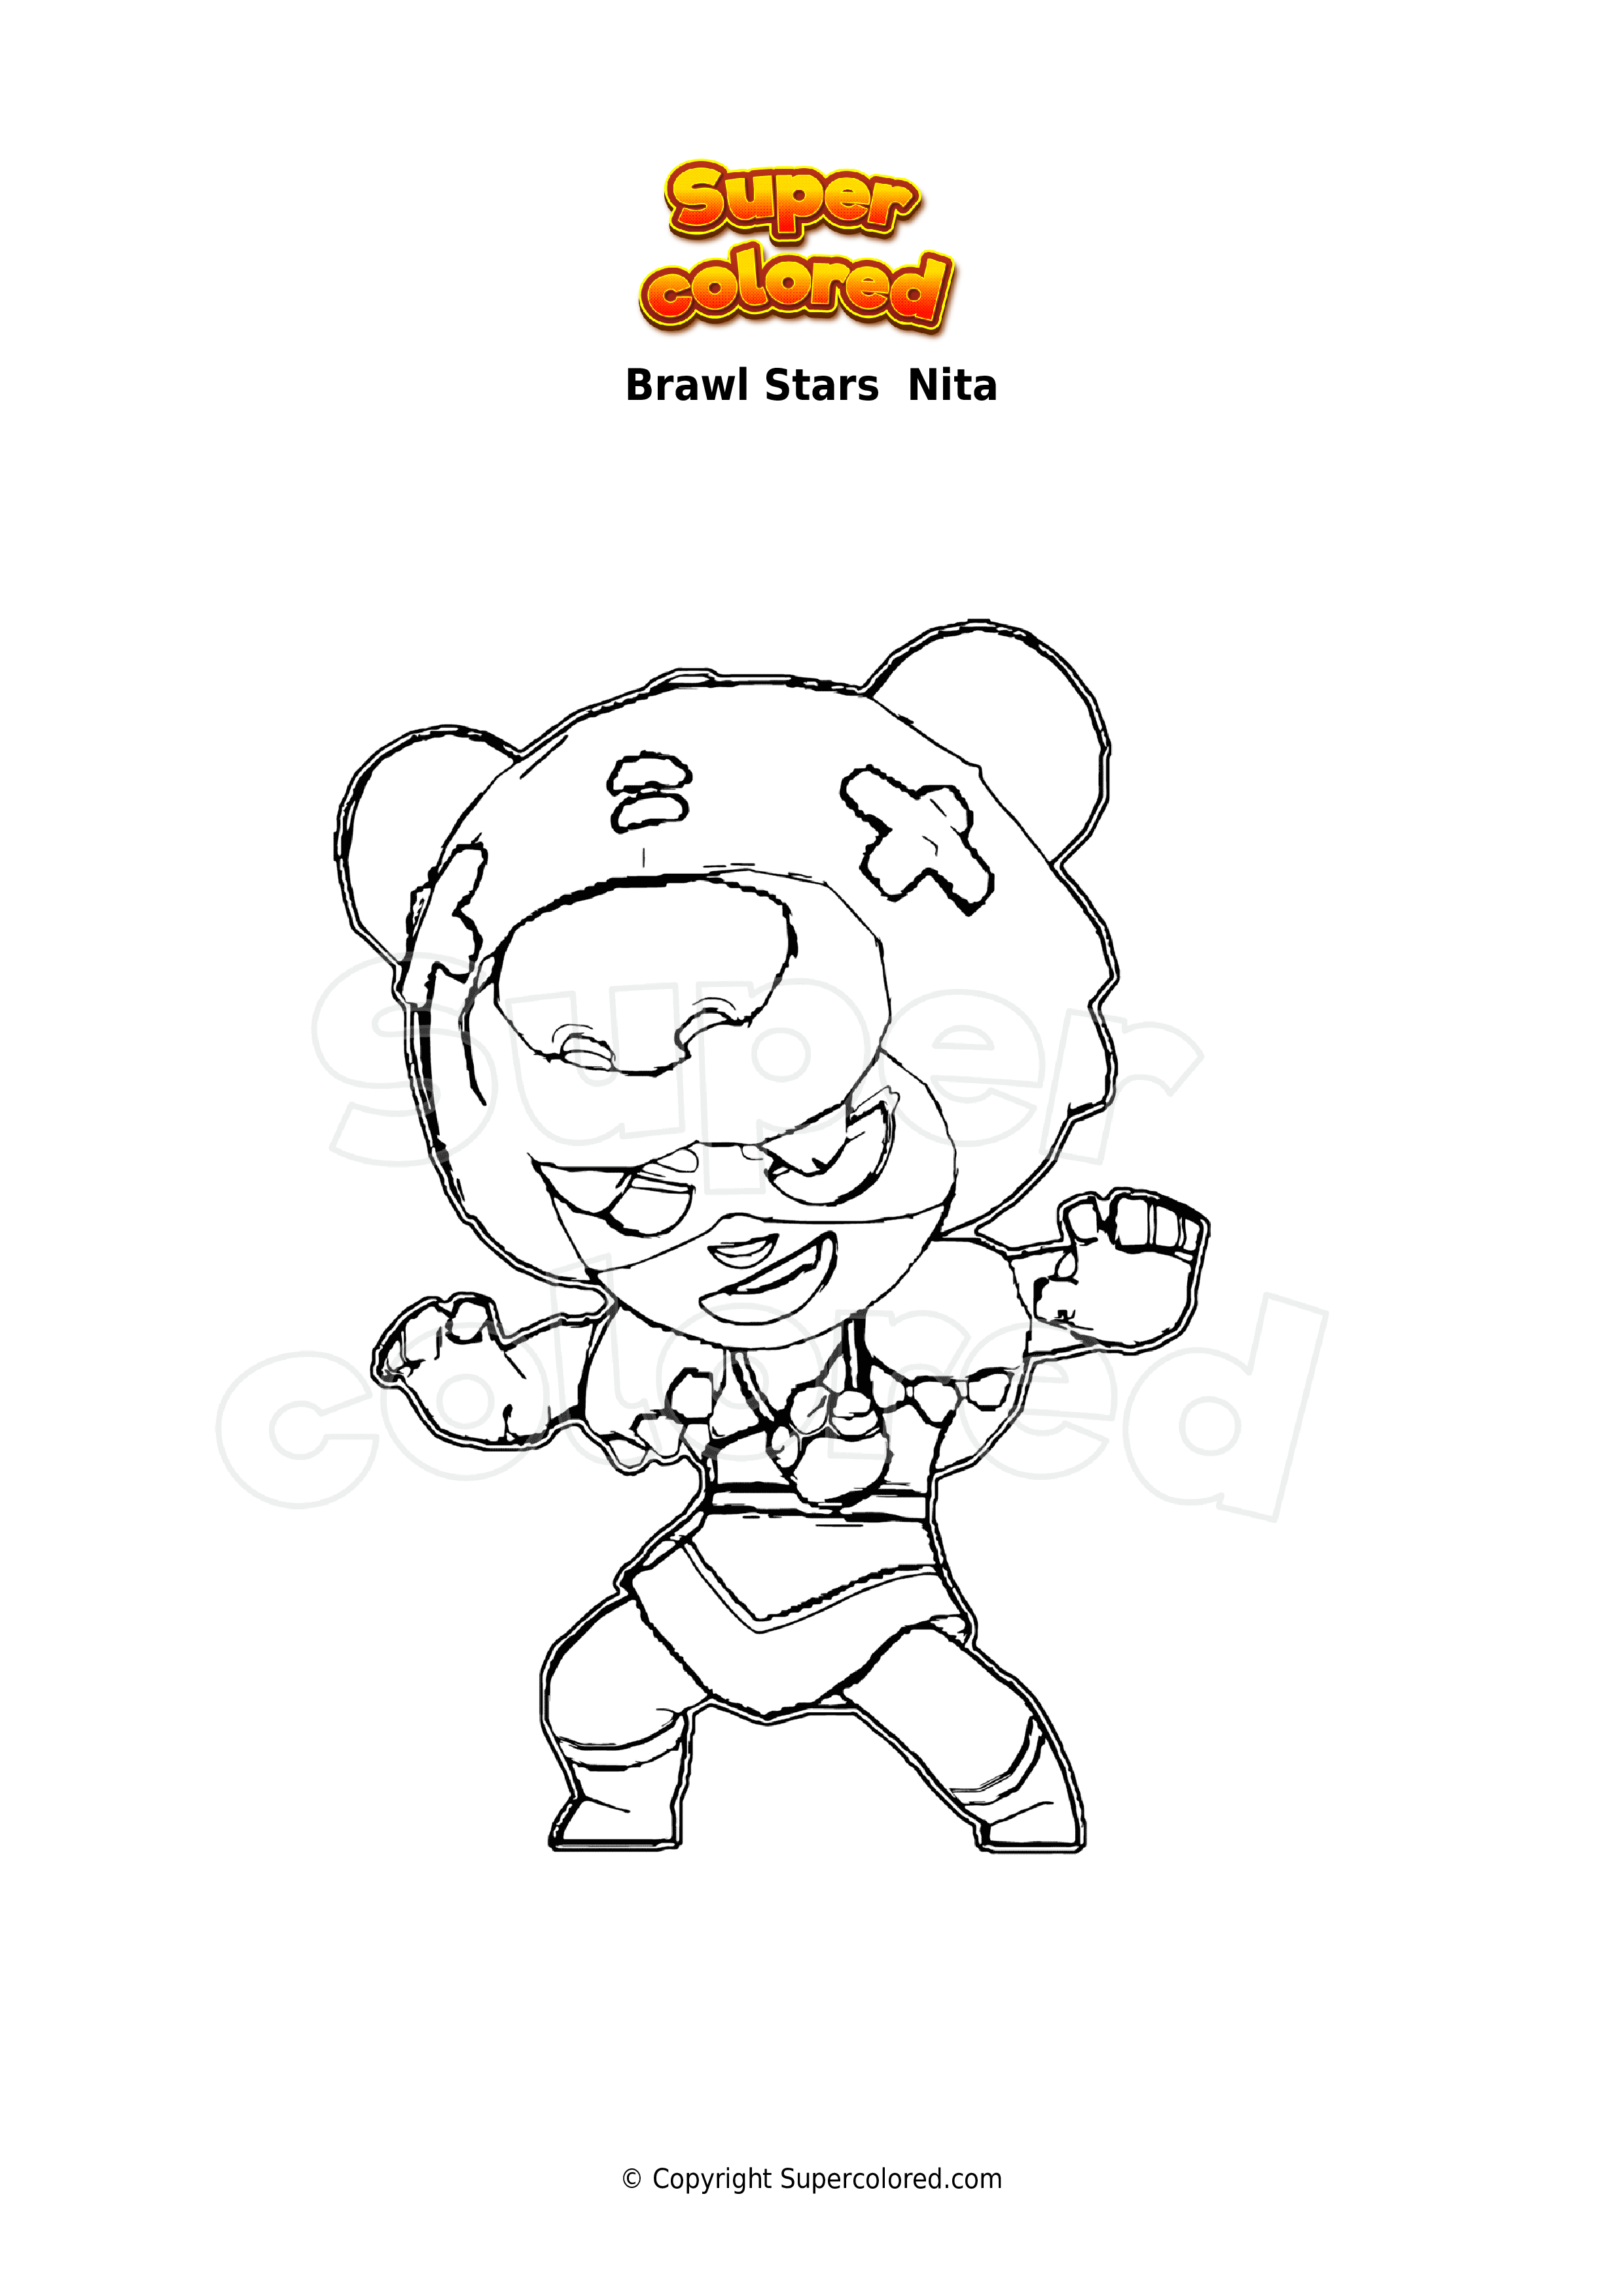 Dibujo Para Colorear Brawl Stars Nita Supercolored Com - imagenes de nita brawl stars para dibujar